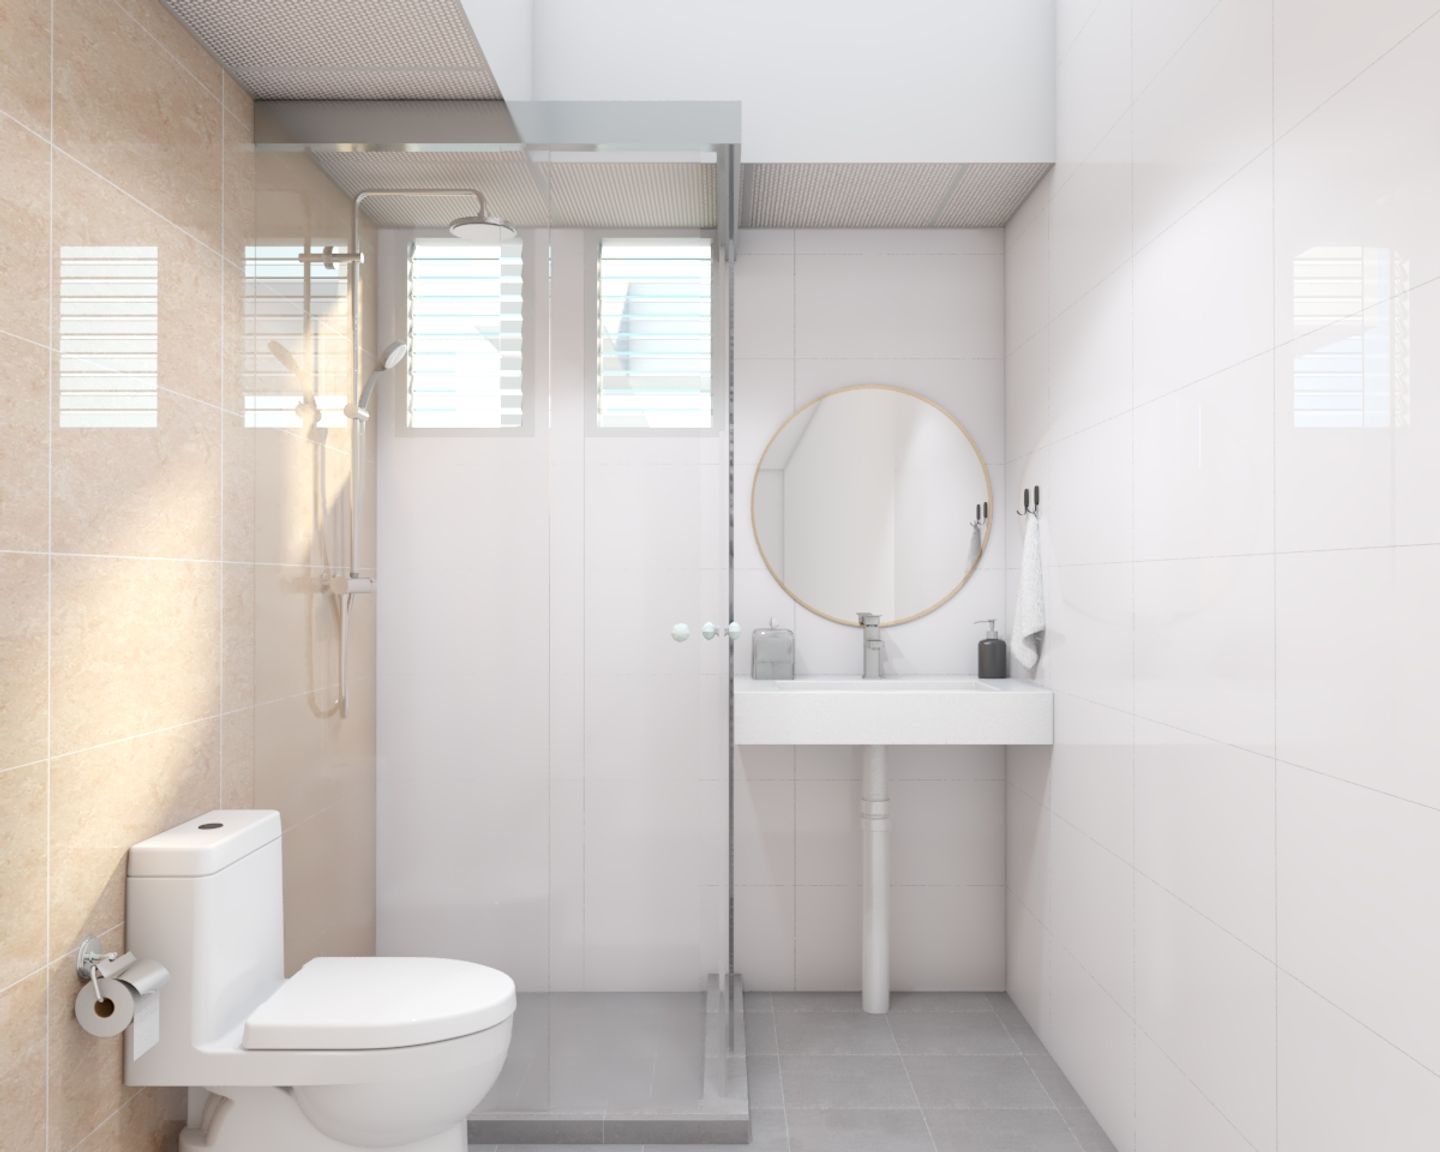 Simple Bathroom With Peach-White Walls - Livspace